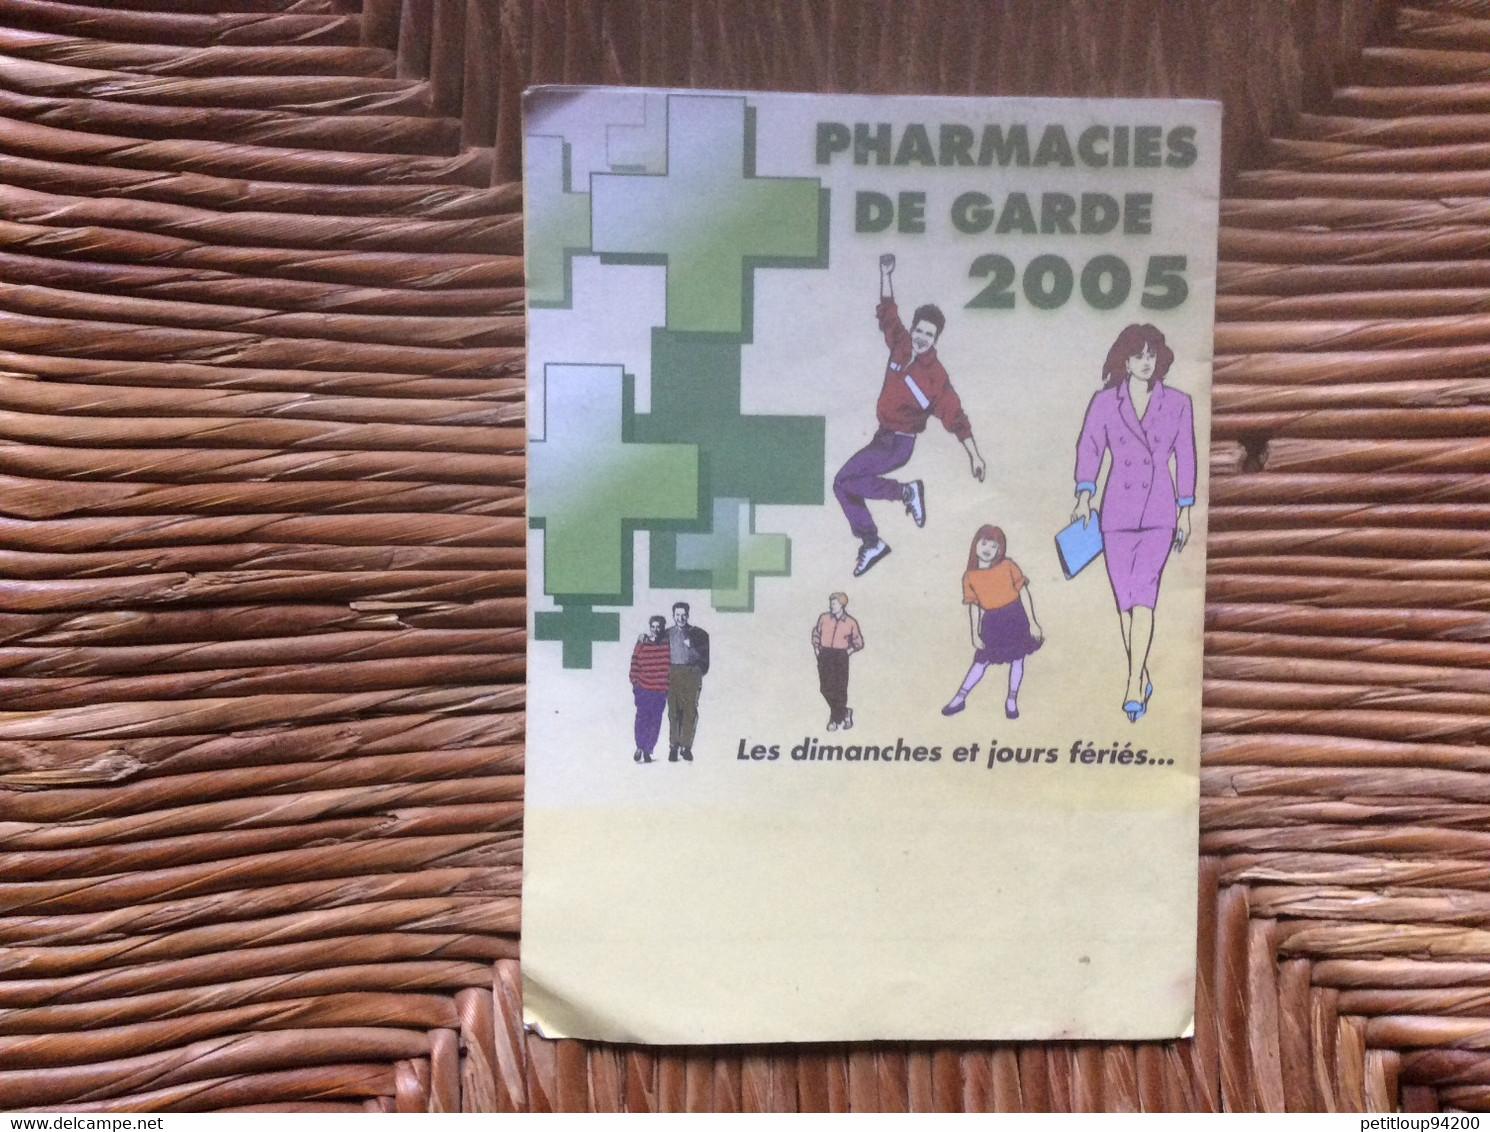 14 CALENDRIERS Pharmacies De Garde 1988 1989 1990 1991 1994 1995 1997 1999 2000  2001 2002 2003 2004 2005 IVRY-SUR-SEINE - Grand Format : 1981-90